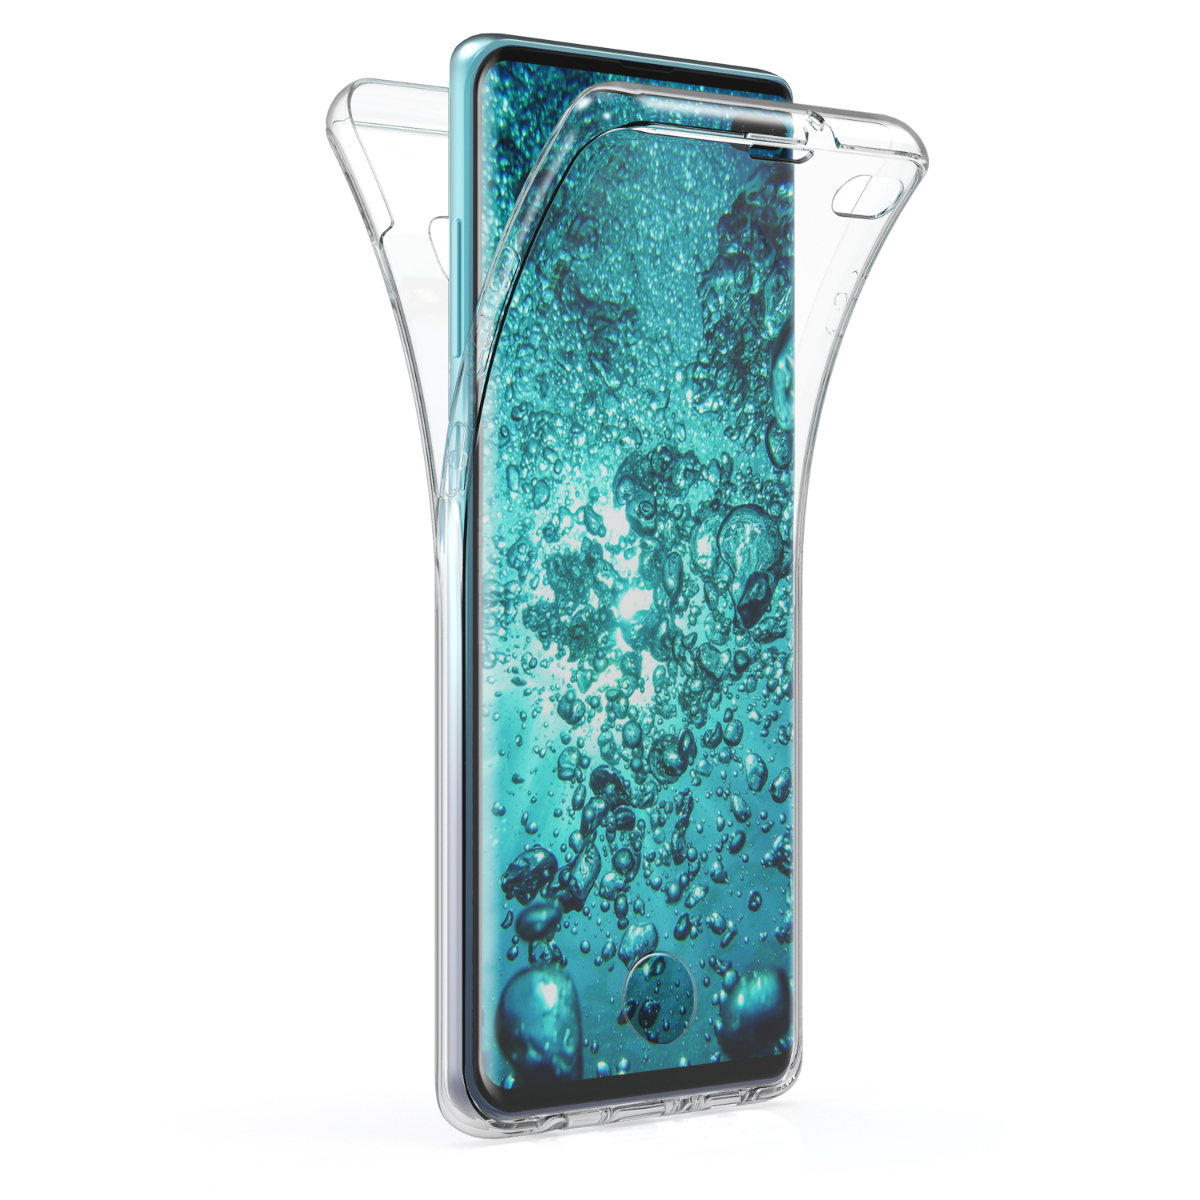 Pouzdro / obal pro Samsung Galaxy S10 Plus